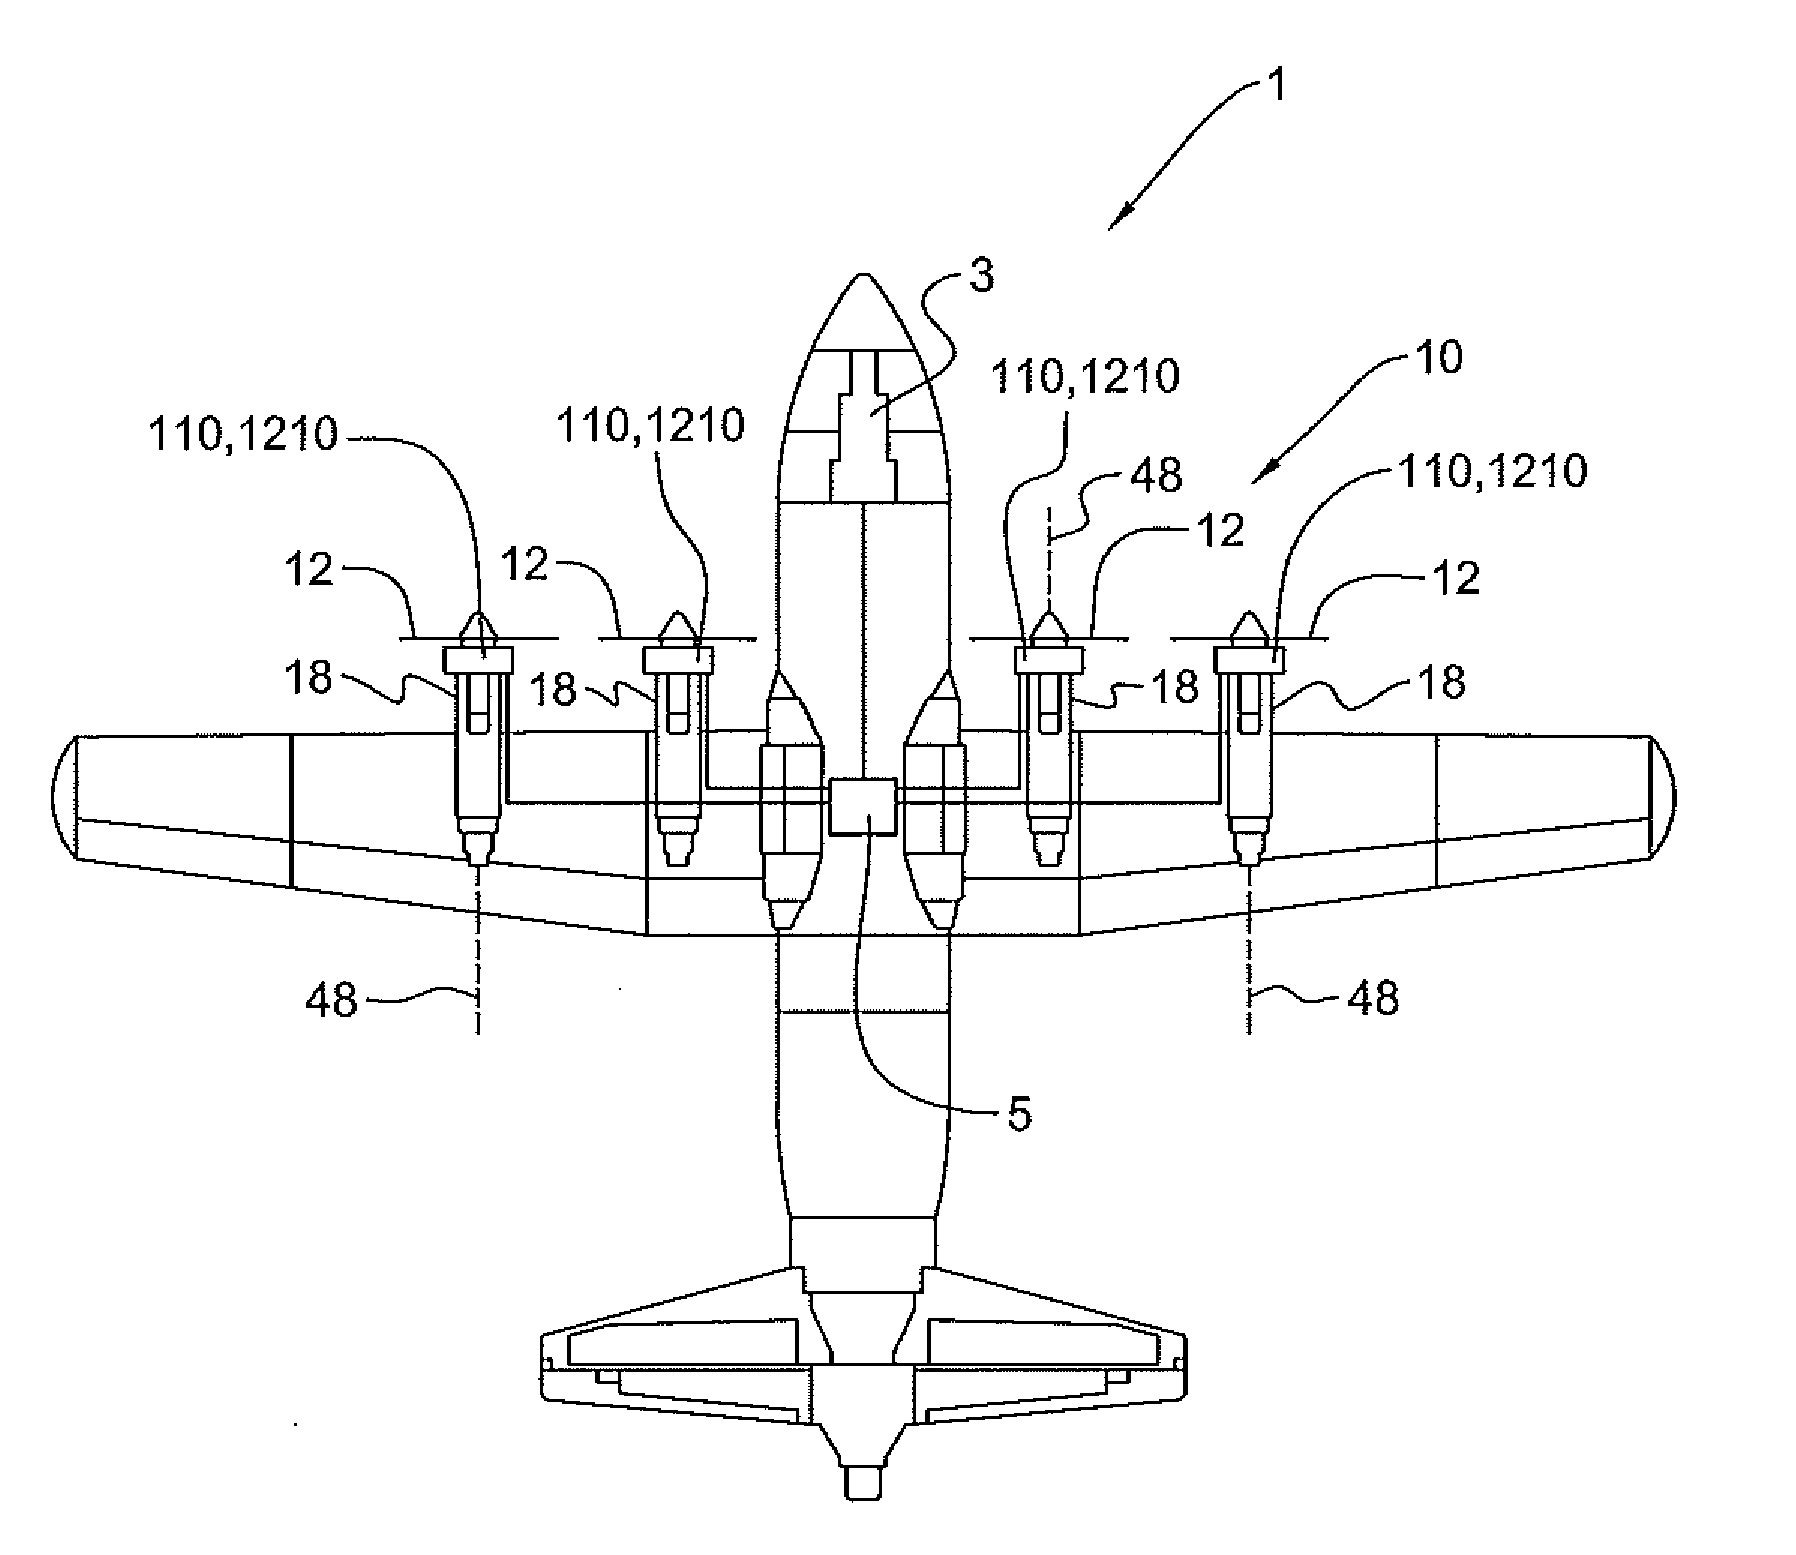 Aircraft propeller balancing system